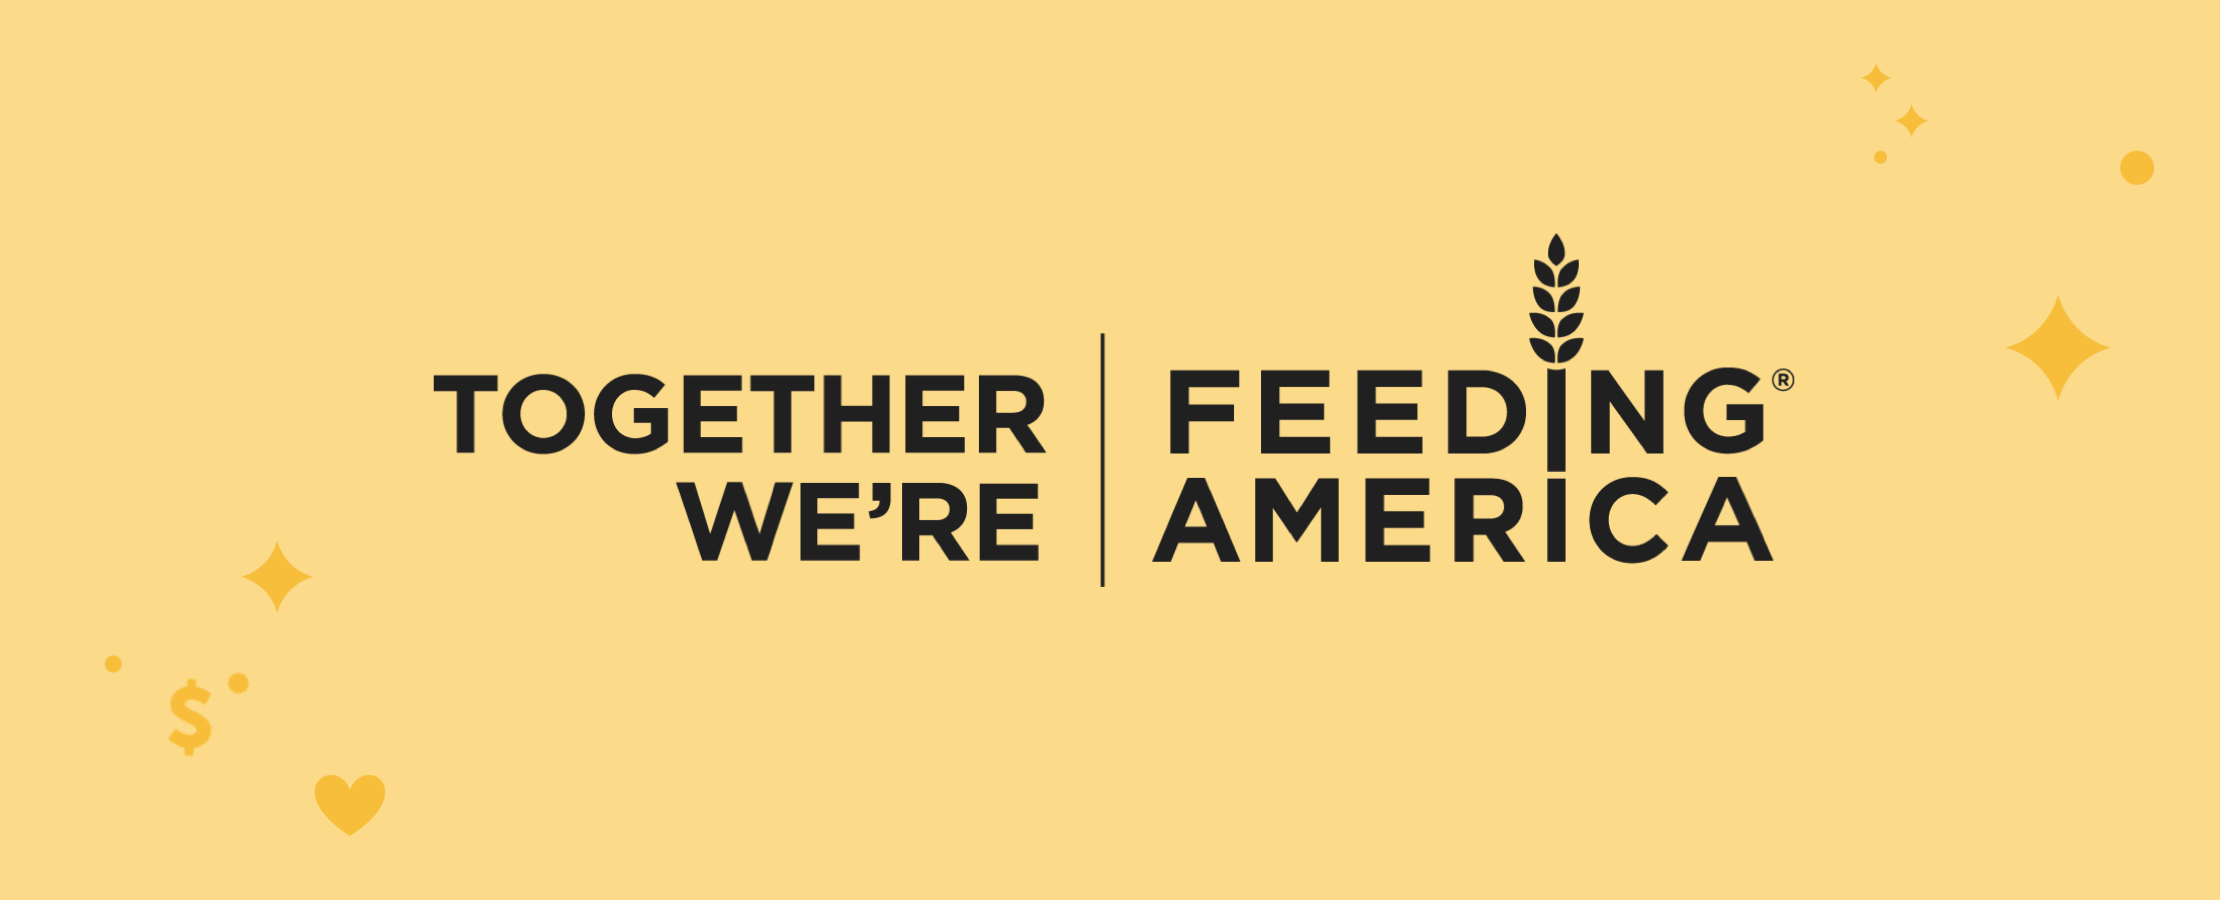 Ibotta kicks off year-long partnership with Feeding America